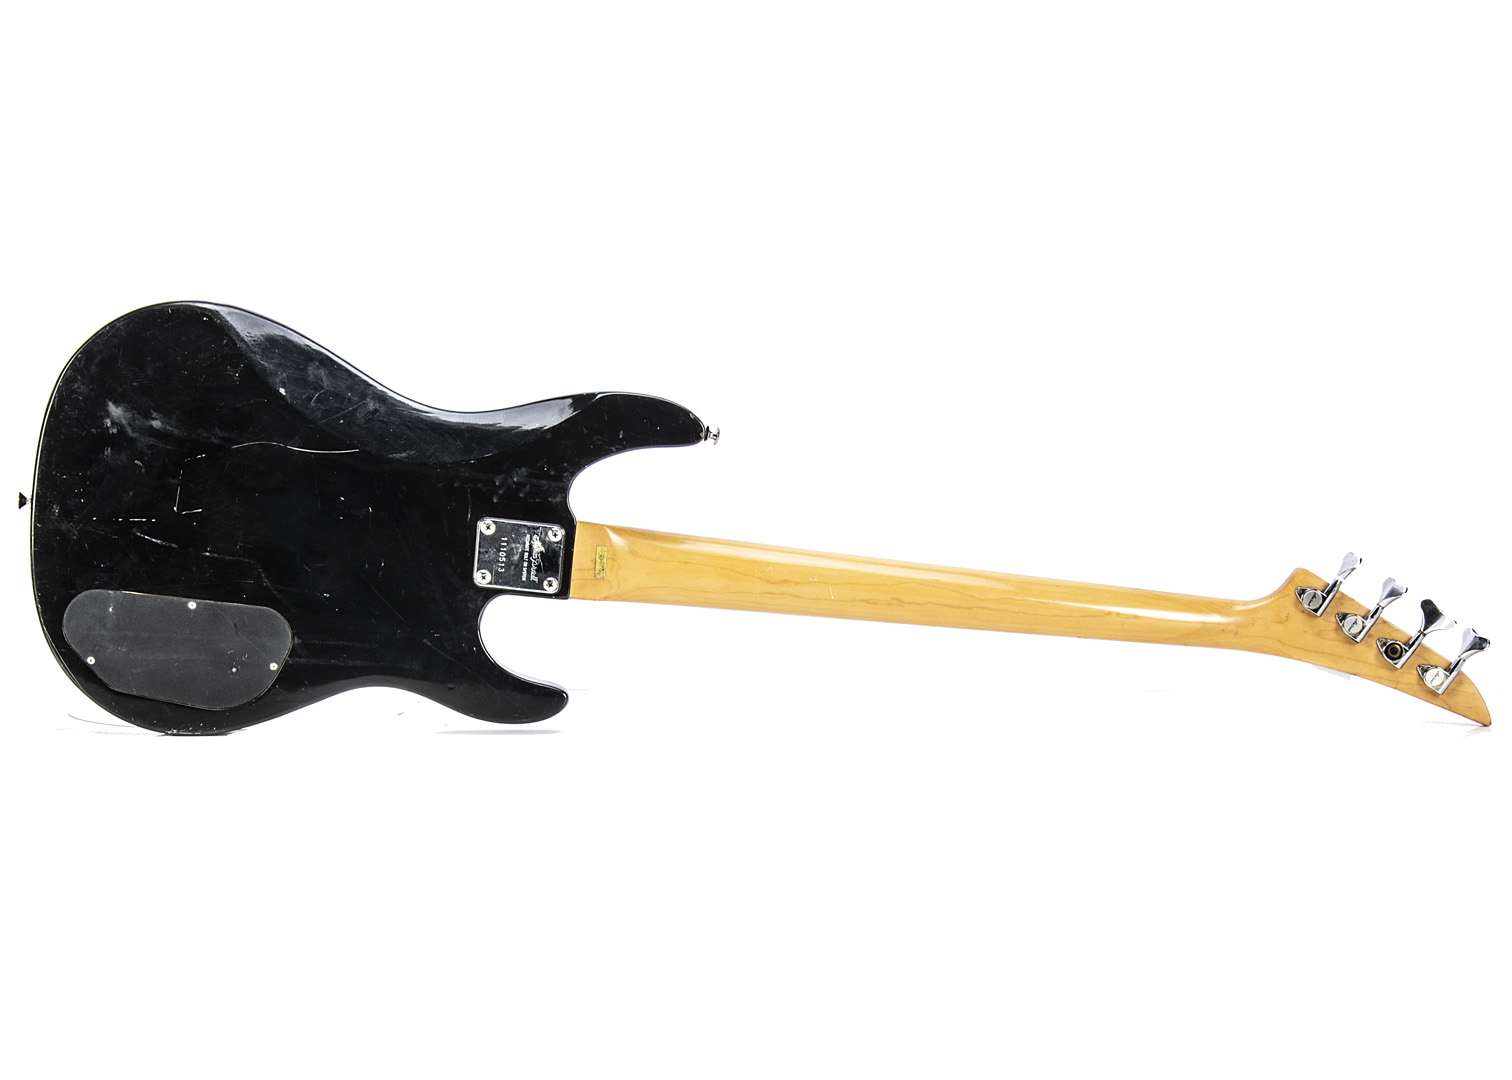 Aria Pro II Bass Guitar, an Aria Pro II SLB-series electrics SLB-2 black bass guitar, s/n 1110513, - Image 4 of 4